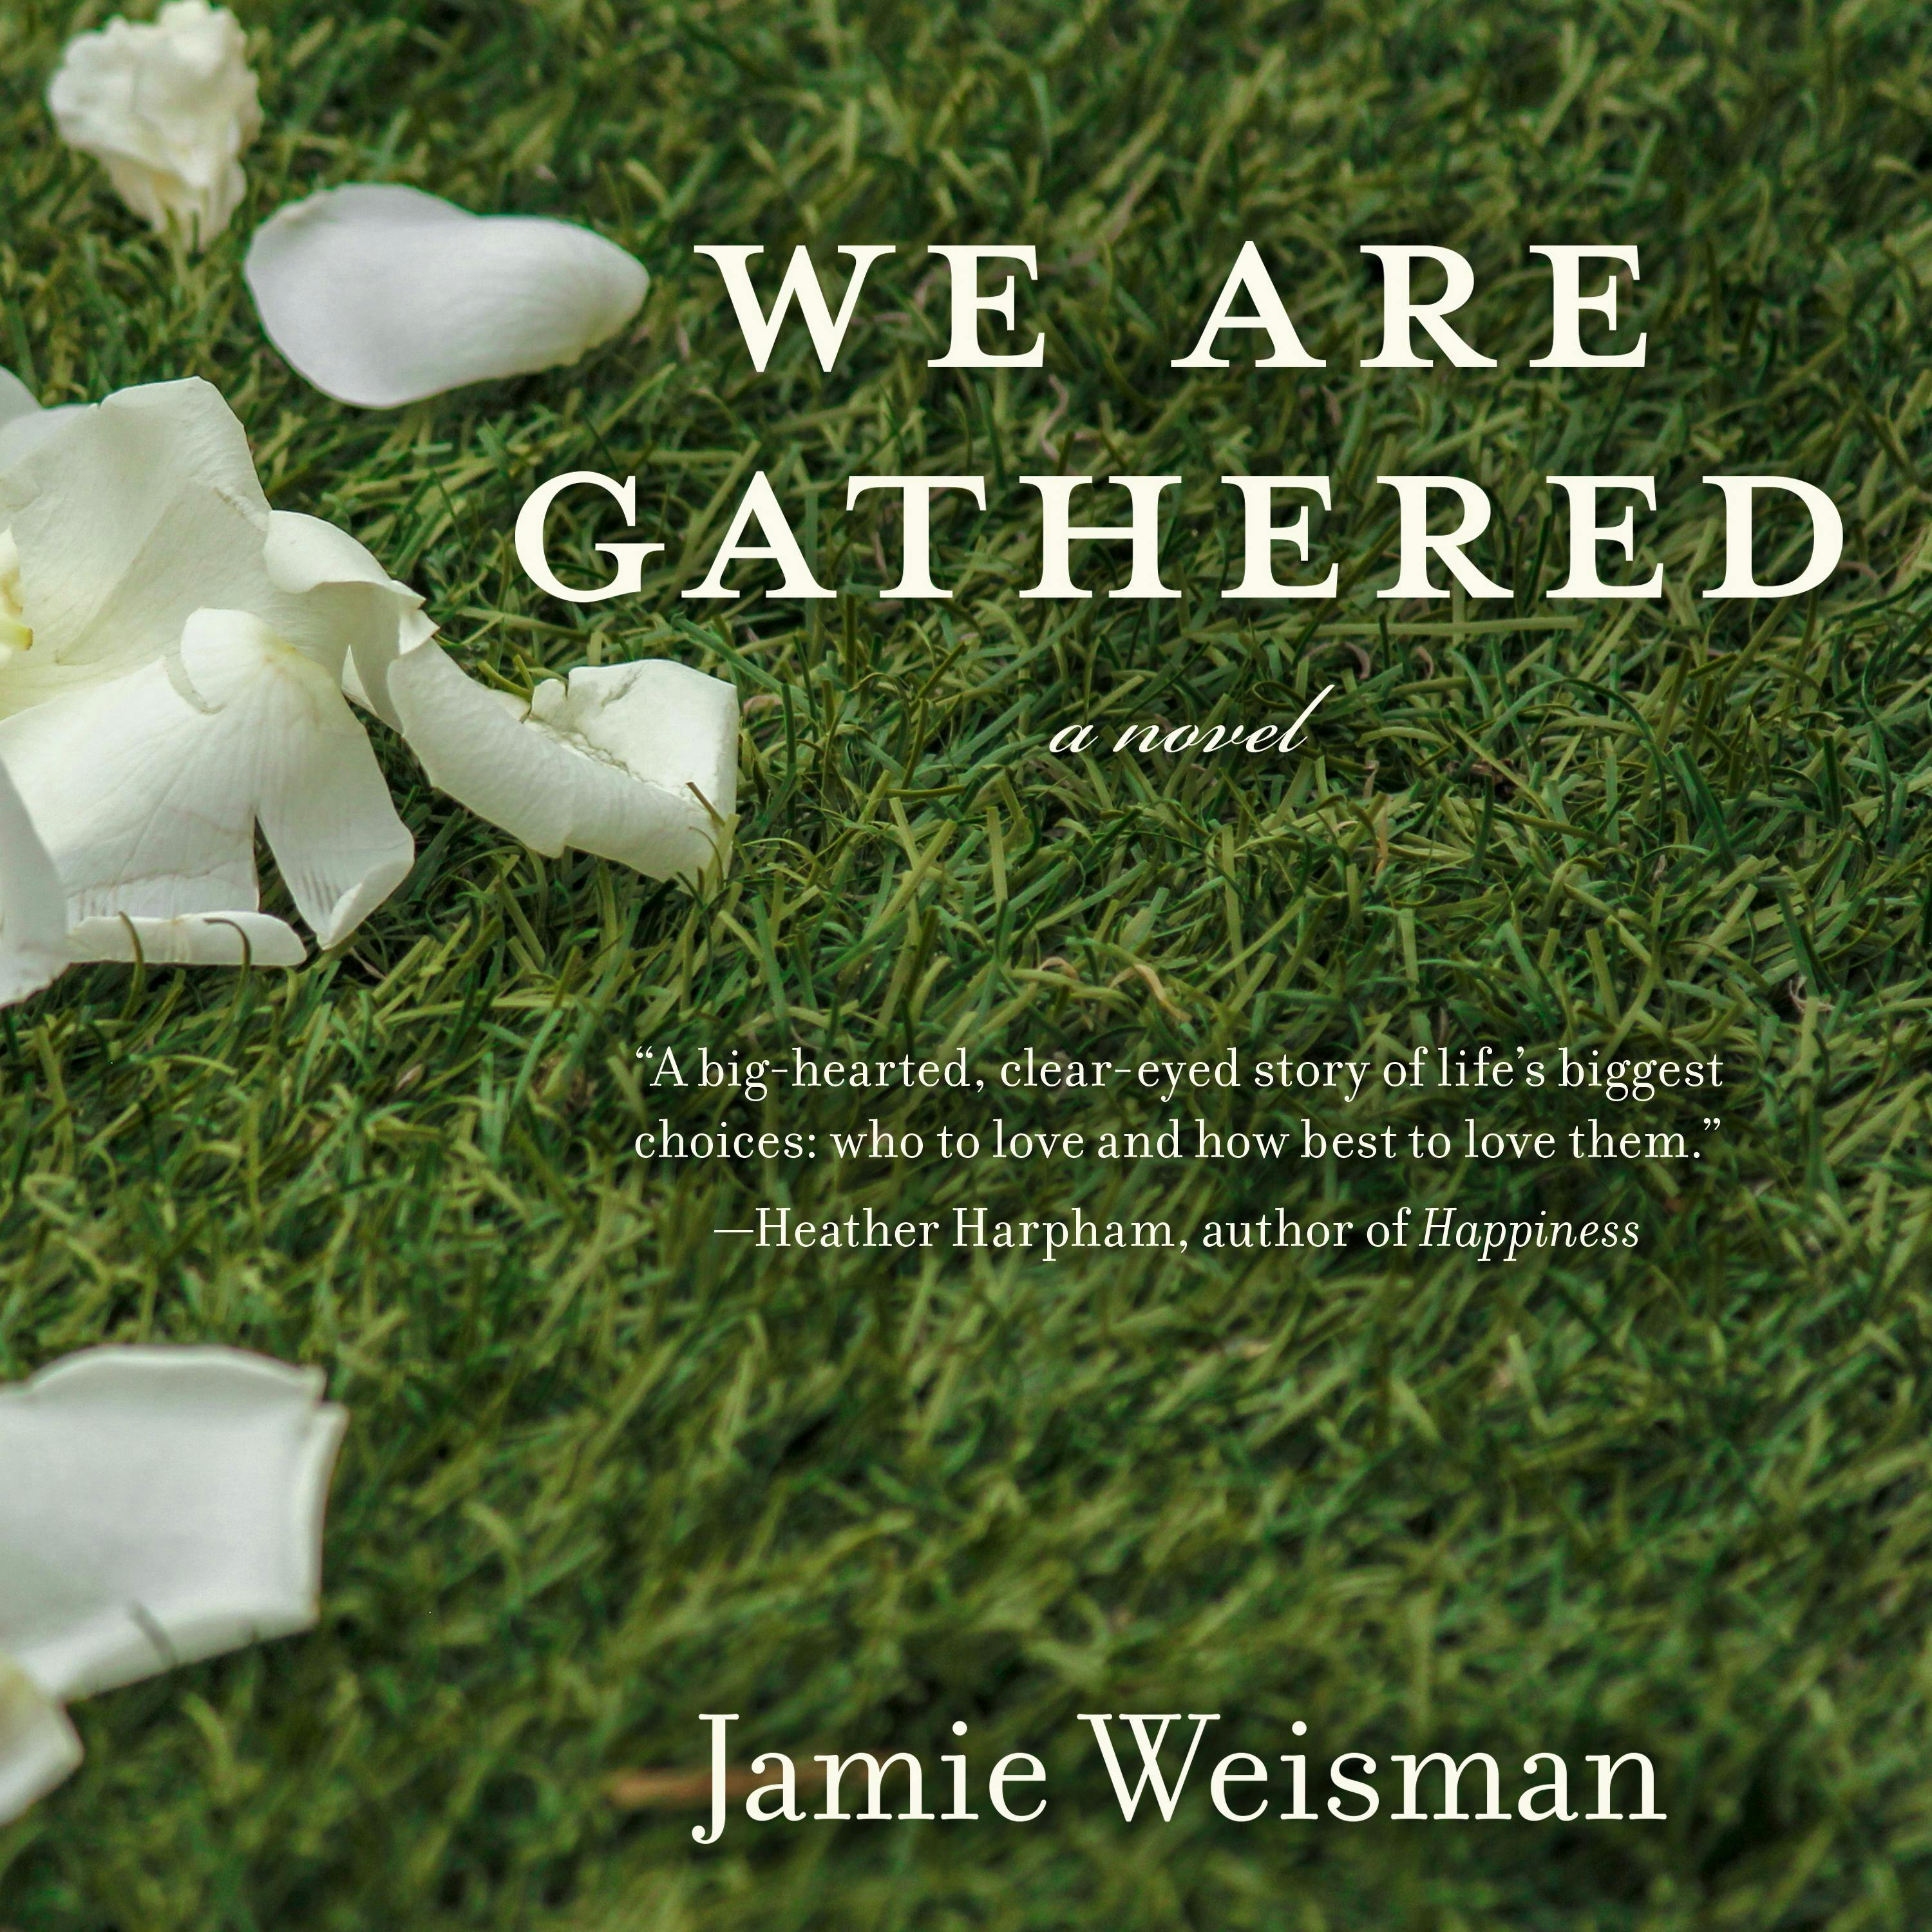 We Are Gathered: A Novel - Jamie Weisman